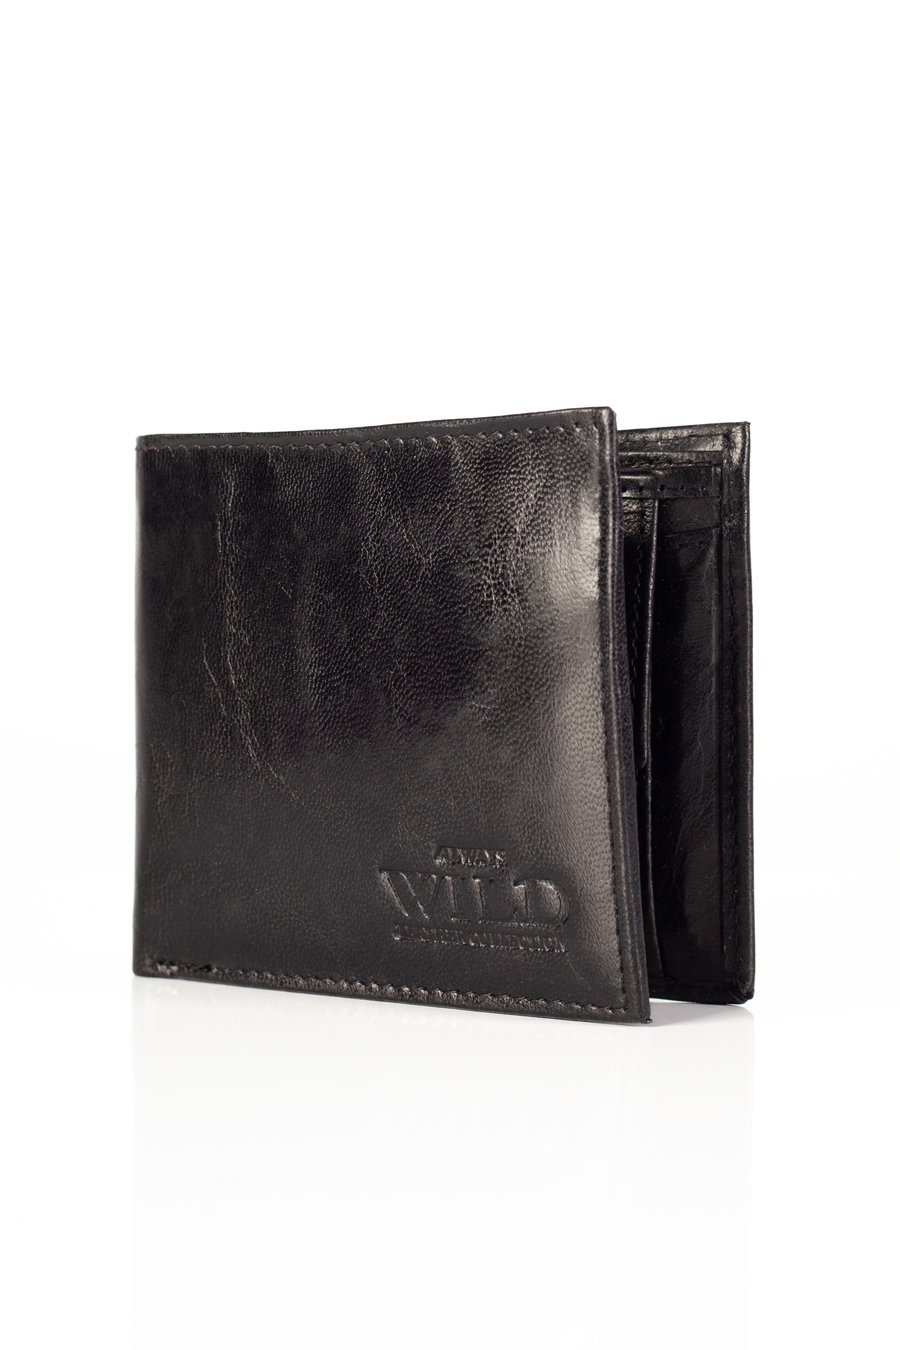 Maks WILD N2002-VTK-BOX-4558-BLACK